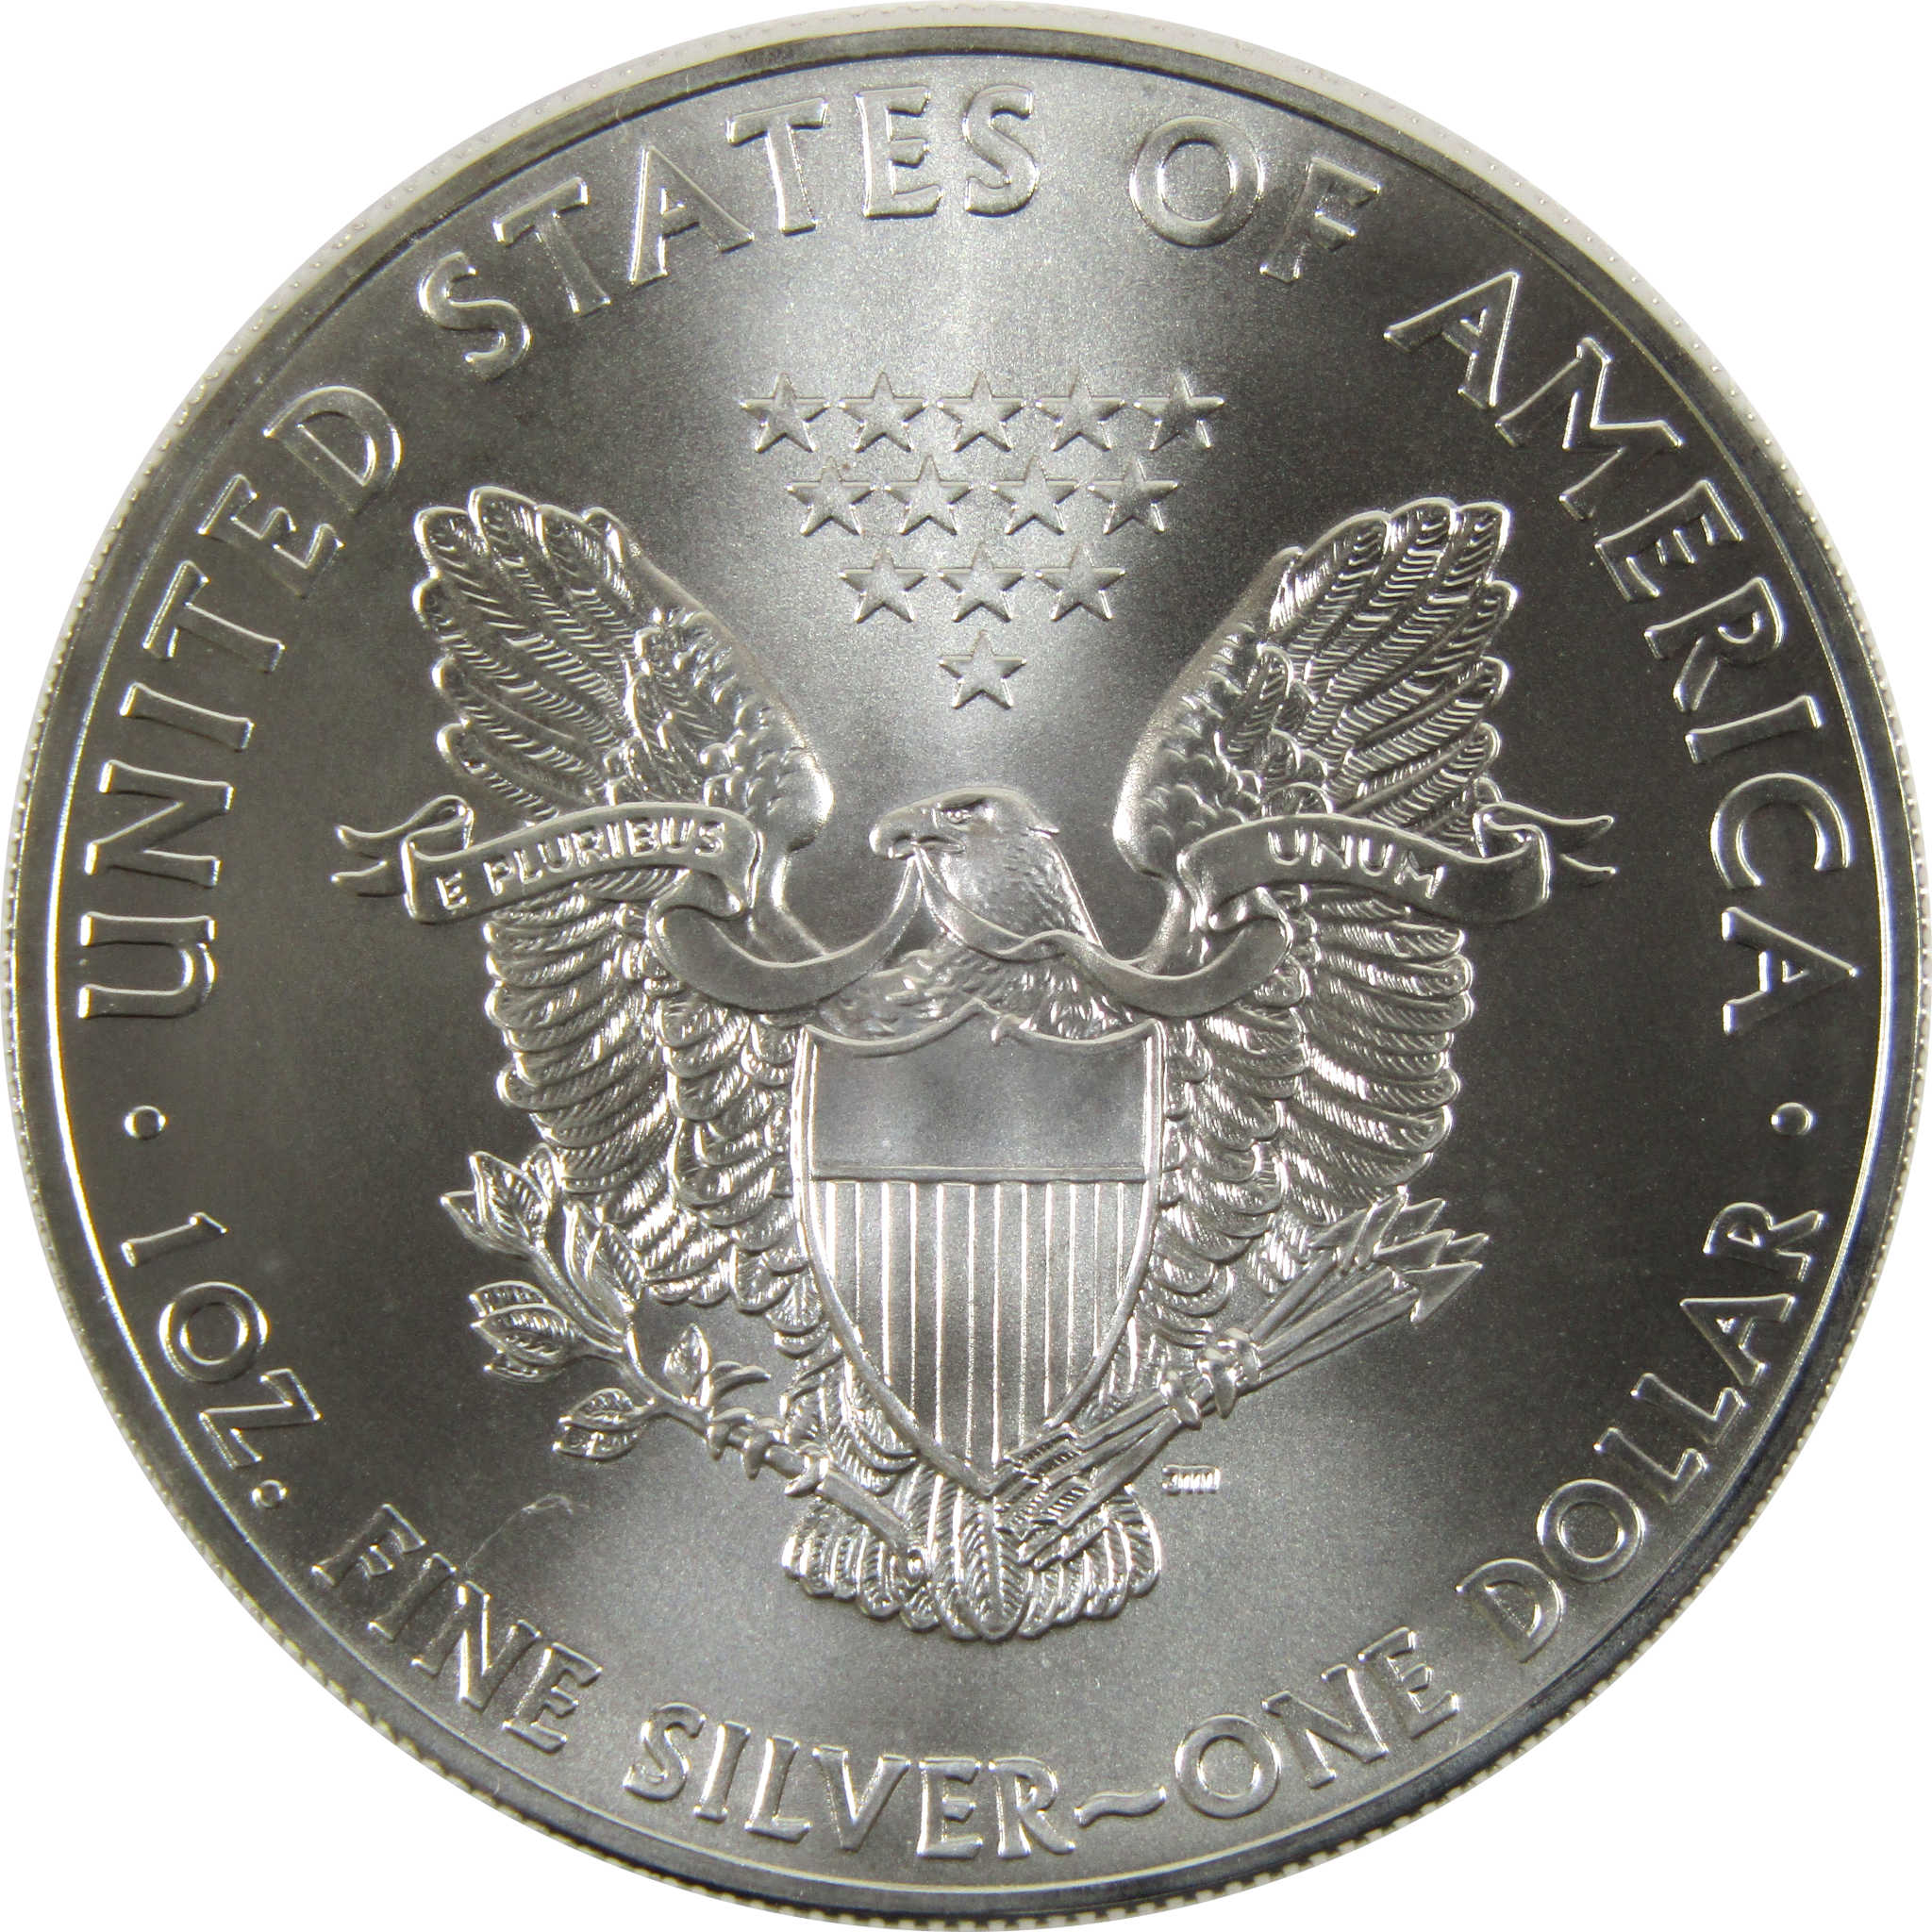 2013 American Eagle BU Uncirculated 1 oz .999 Silver Bullion $1 Coin